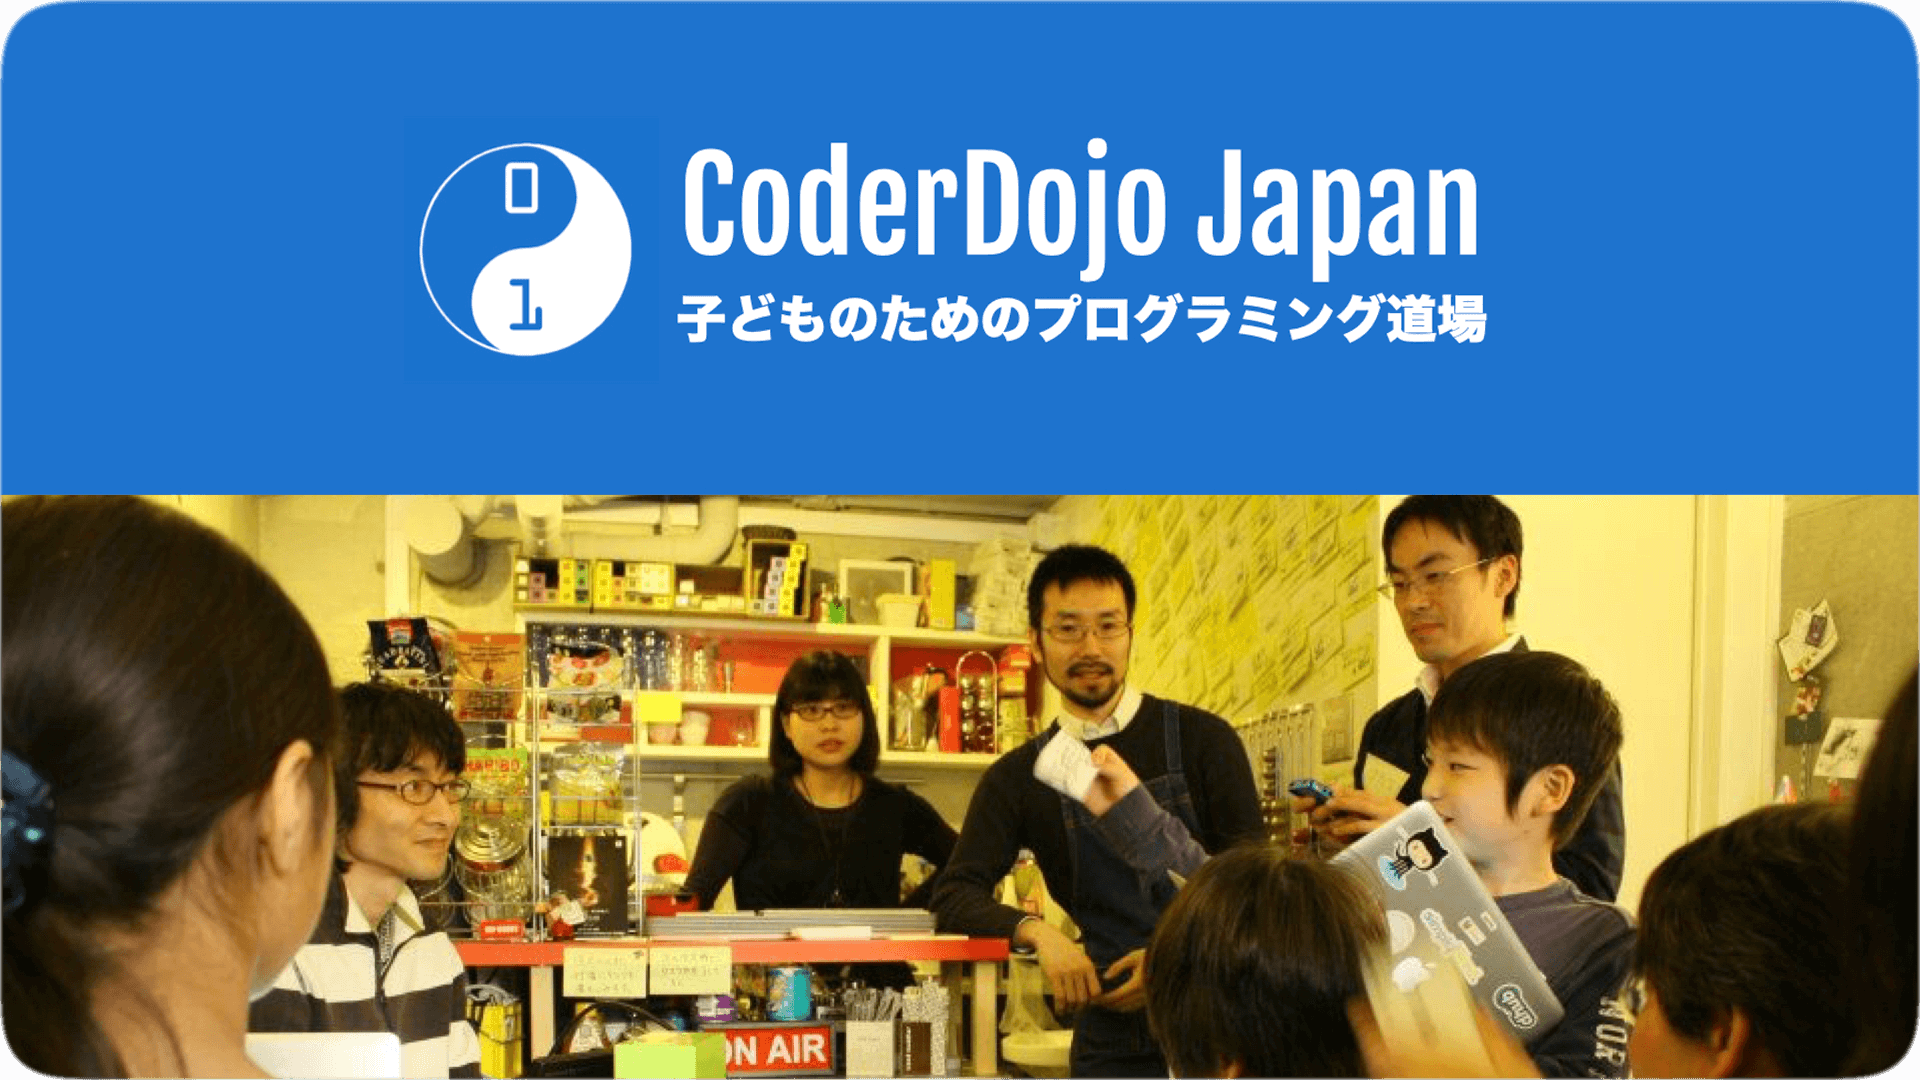 CoderDojo Japan Association